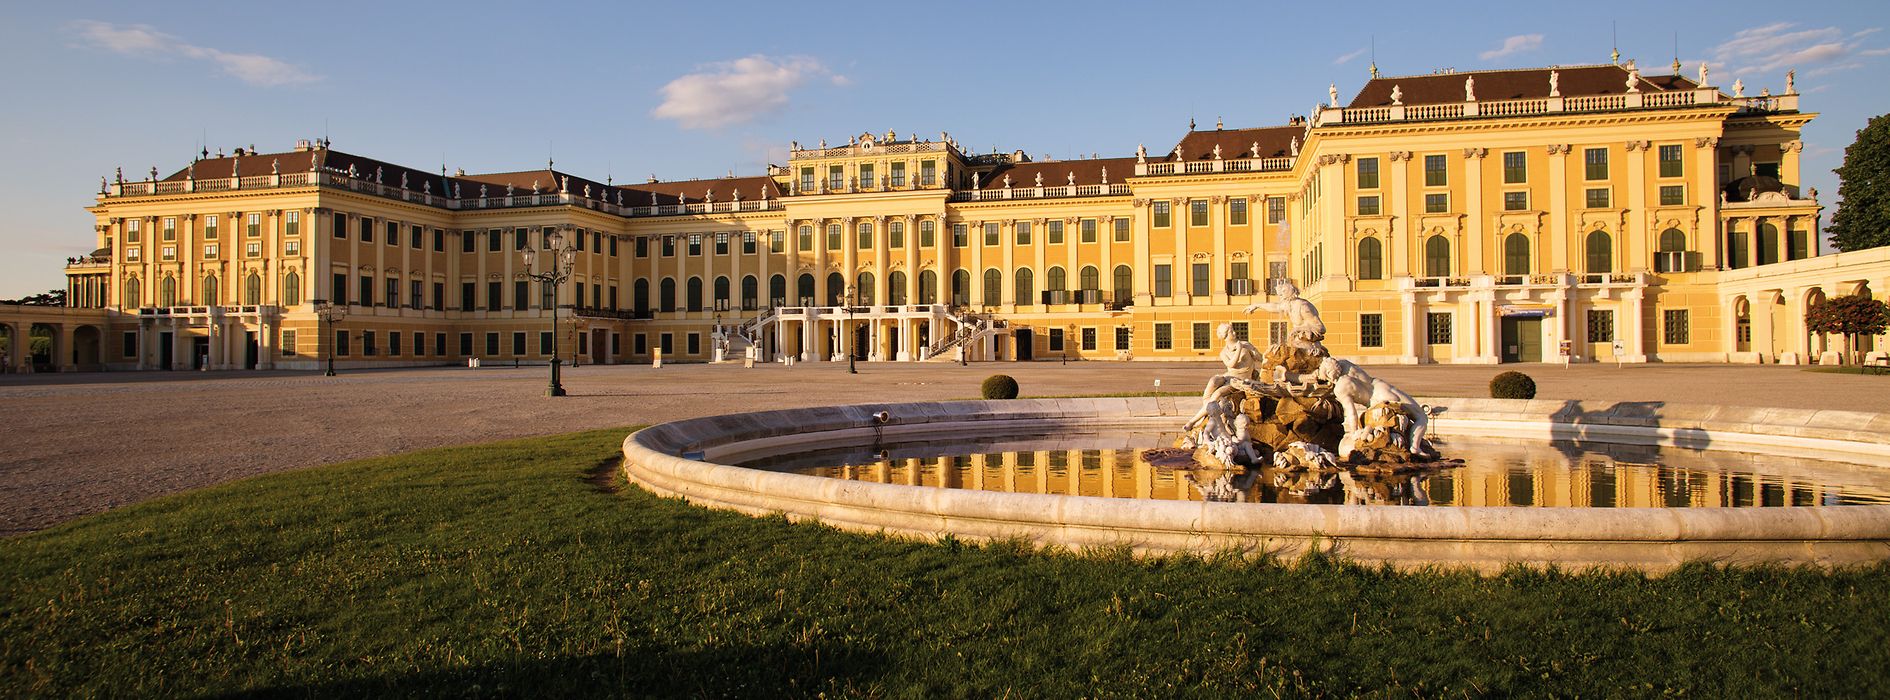 Il castello di Schönbrunn